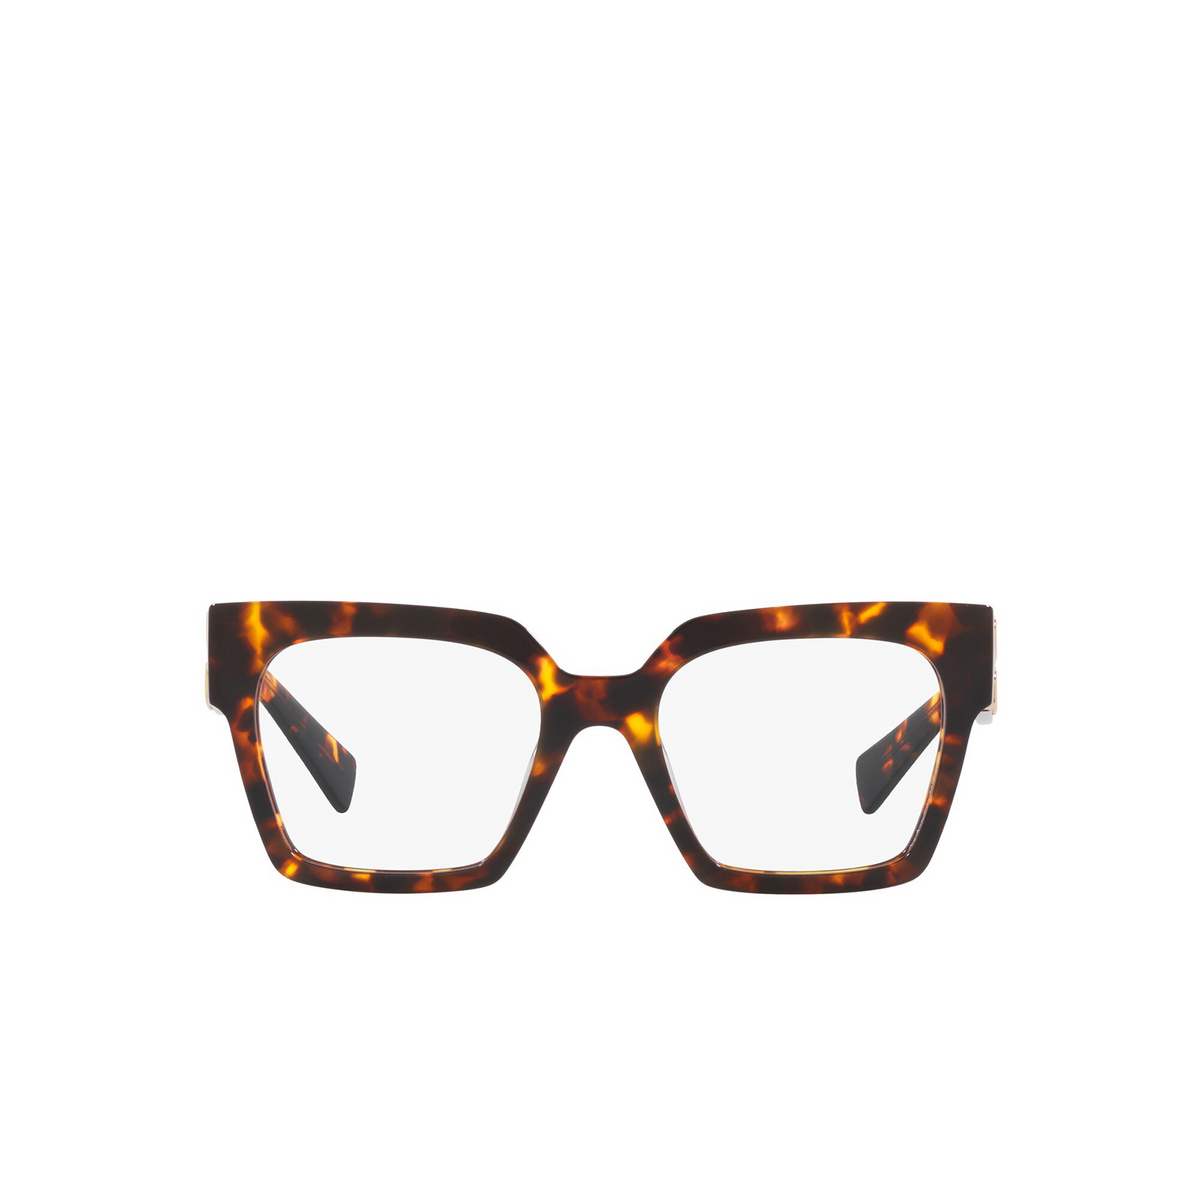 Miu Miu® Square Eyeglasses: MU 04UV color Honey Havana VAU1O1 - front view.